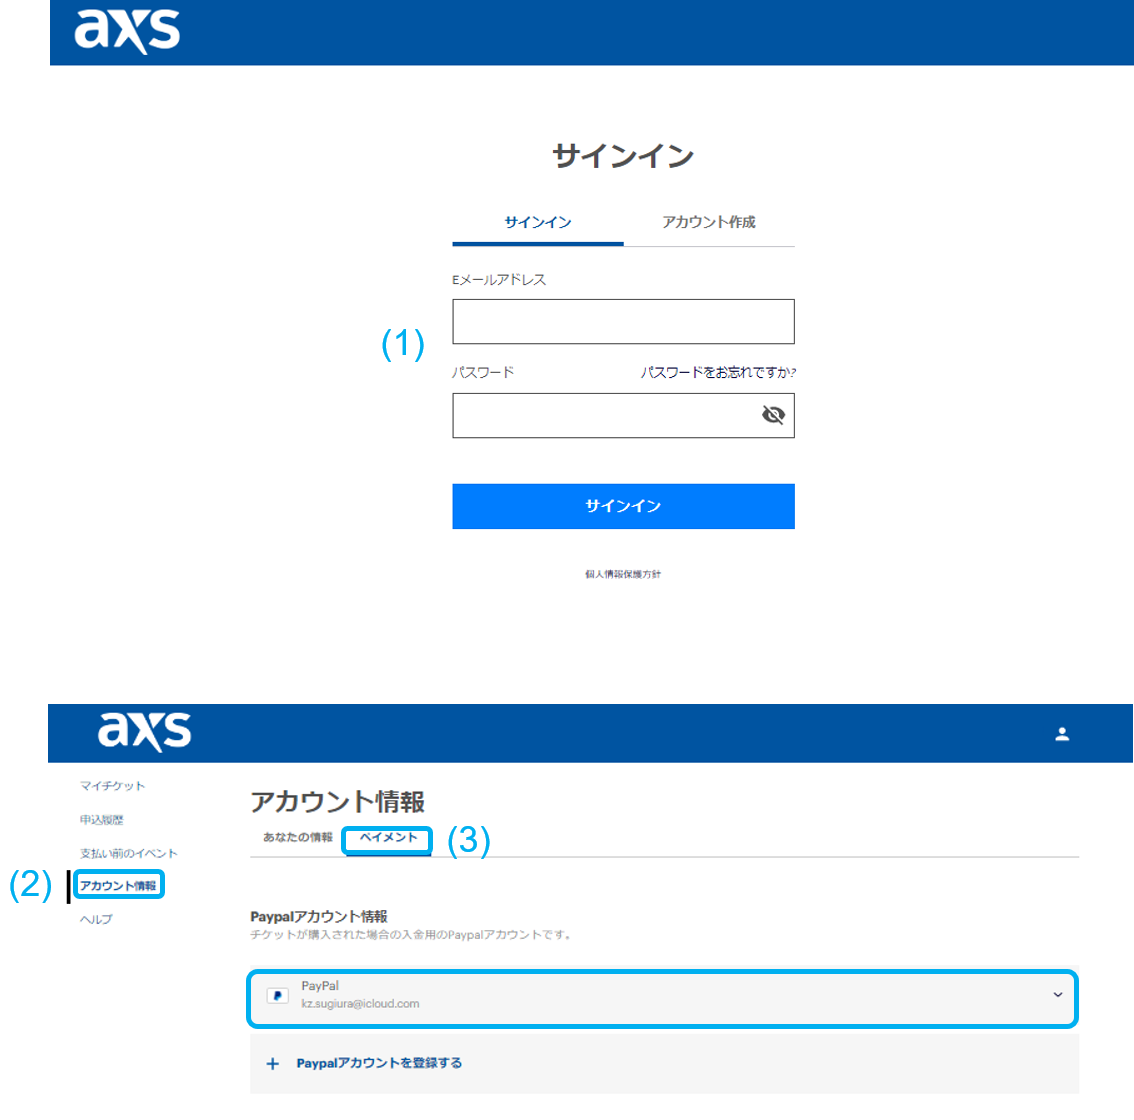 ②「AXS Ticketsアプリ」を開く